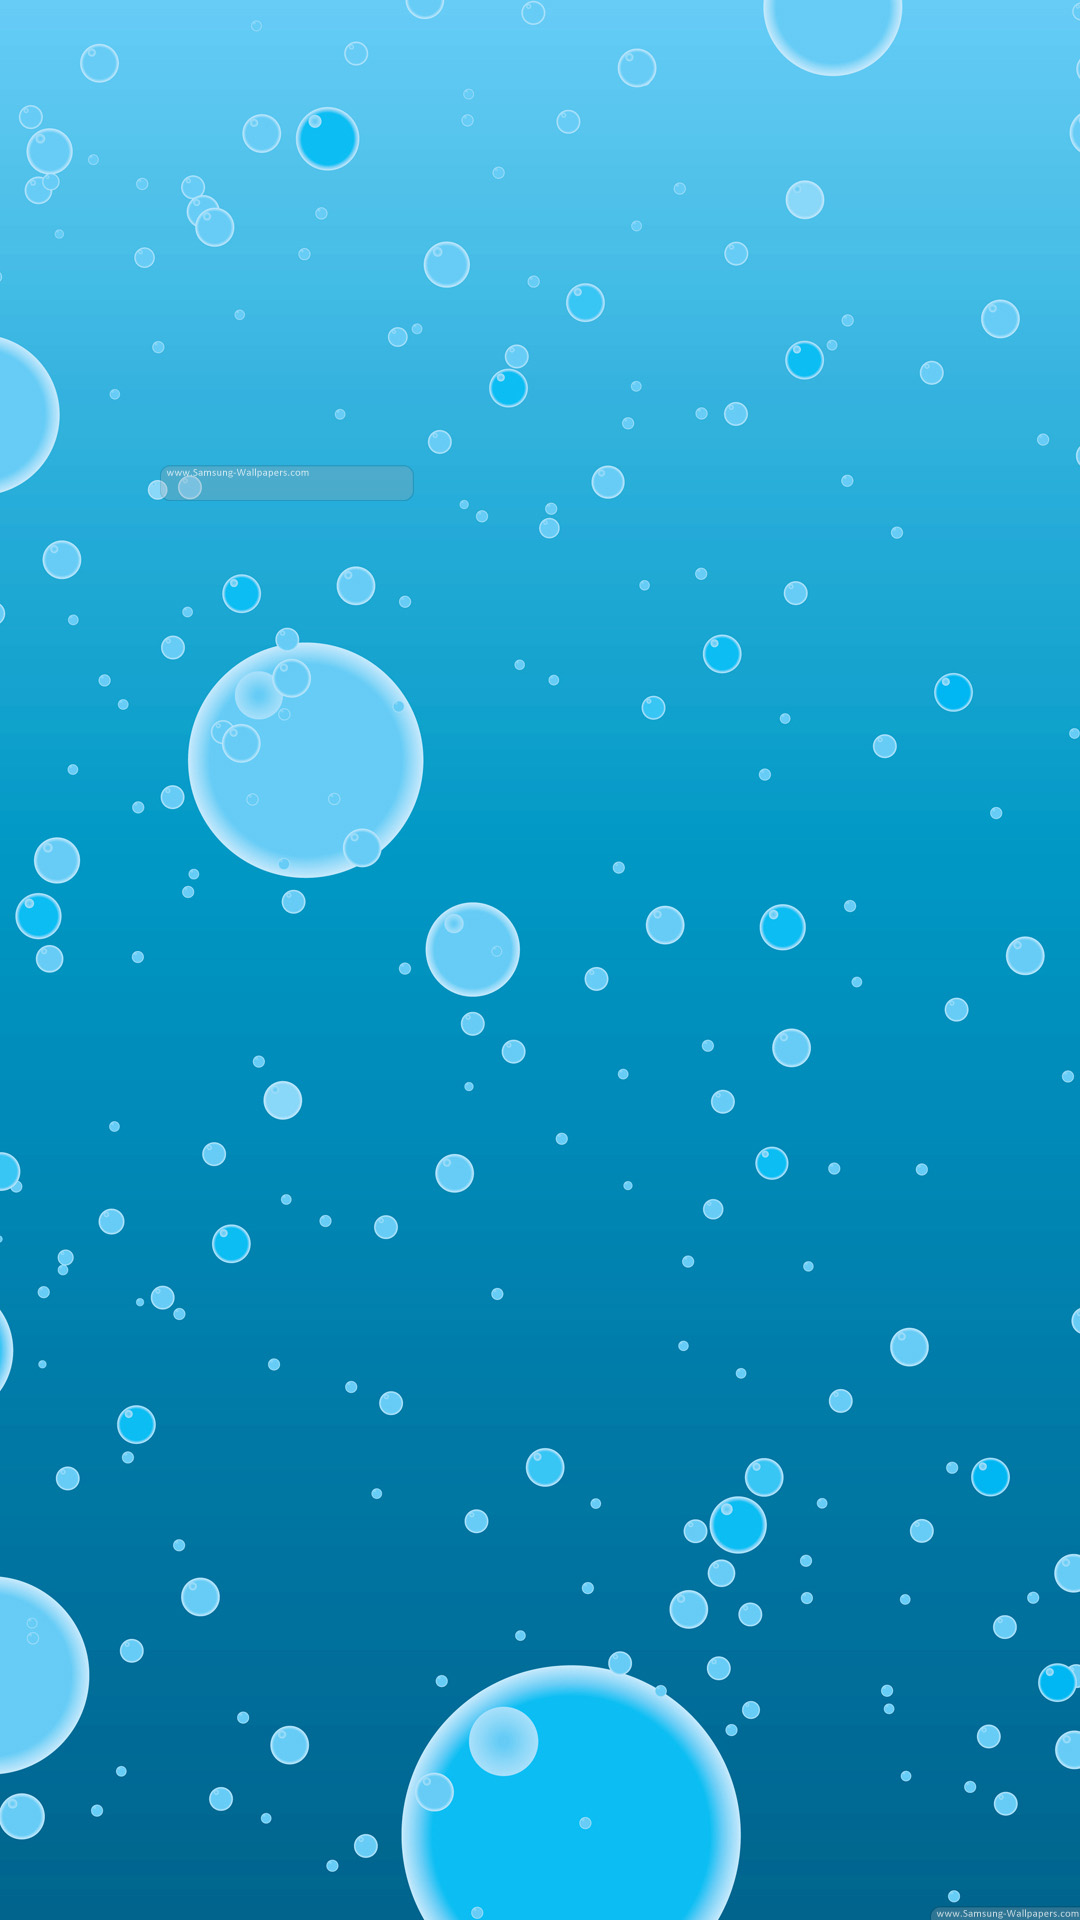 Water Bubbles Illustration iPhone Plus HD Wallpaper Ipod